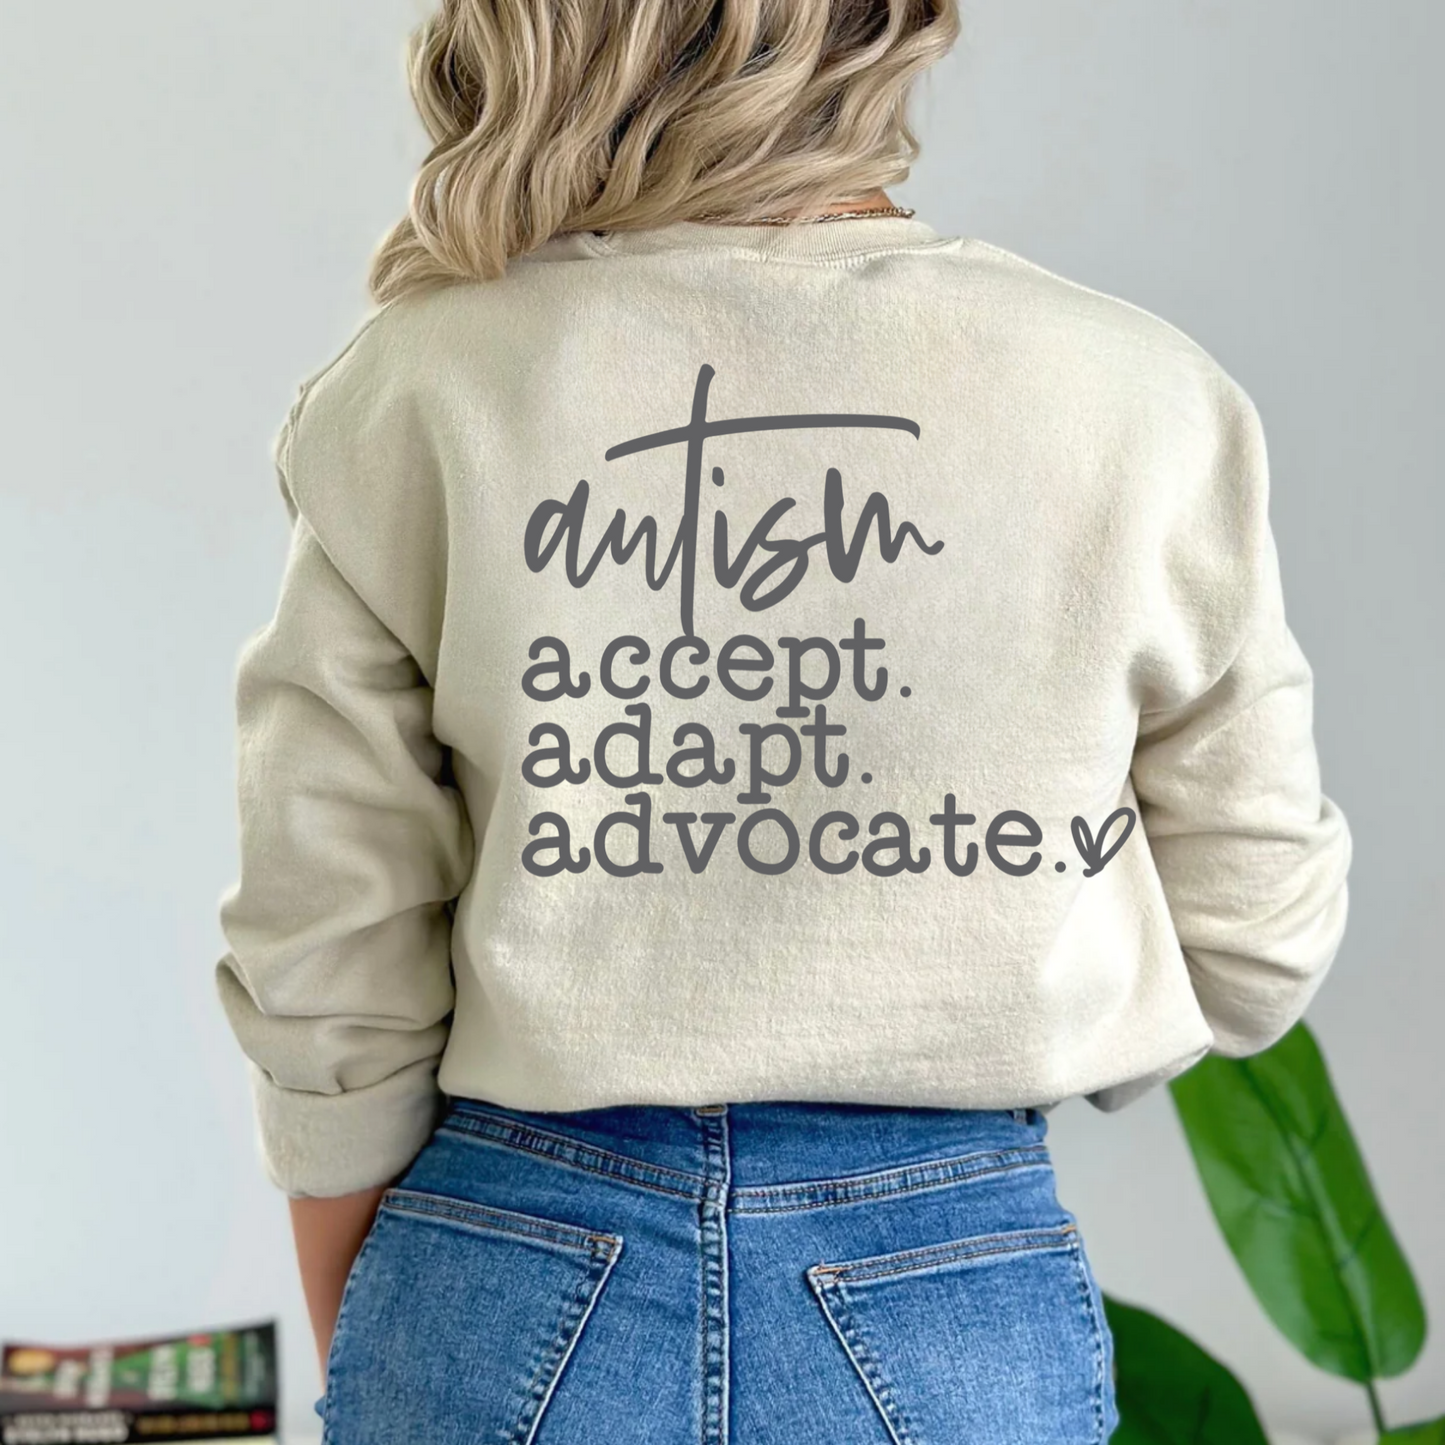 (shirt not included) Autism. accept. adapt. advocate - Metallic Platinum - Screen print Transfer